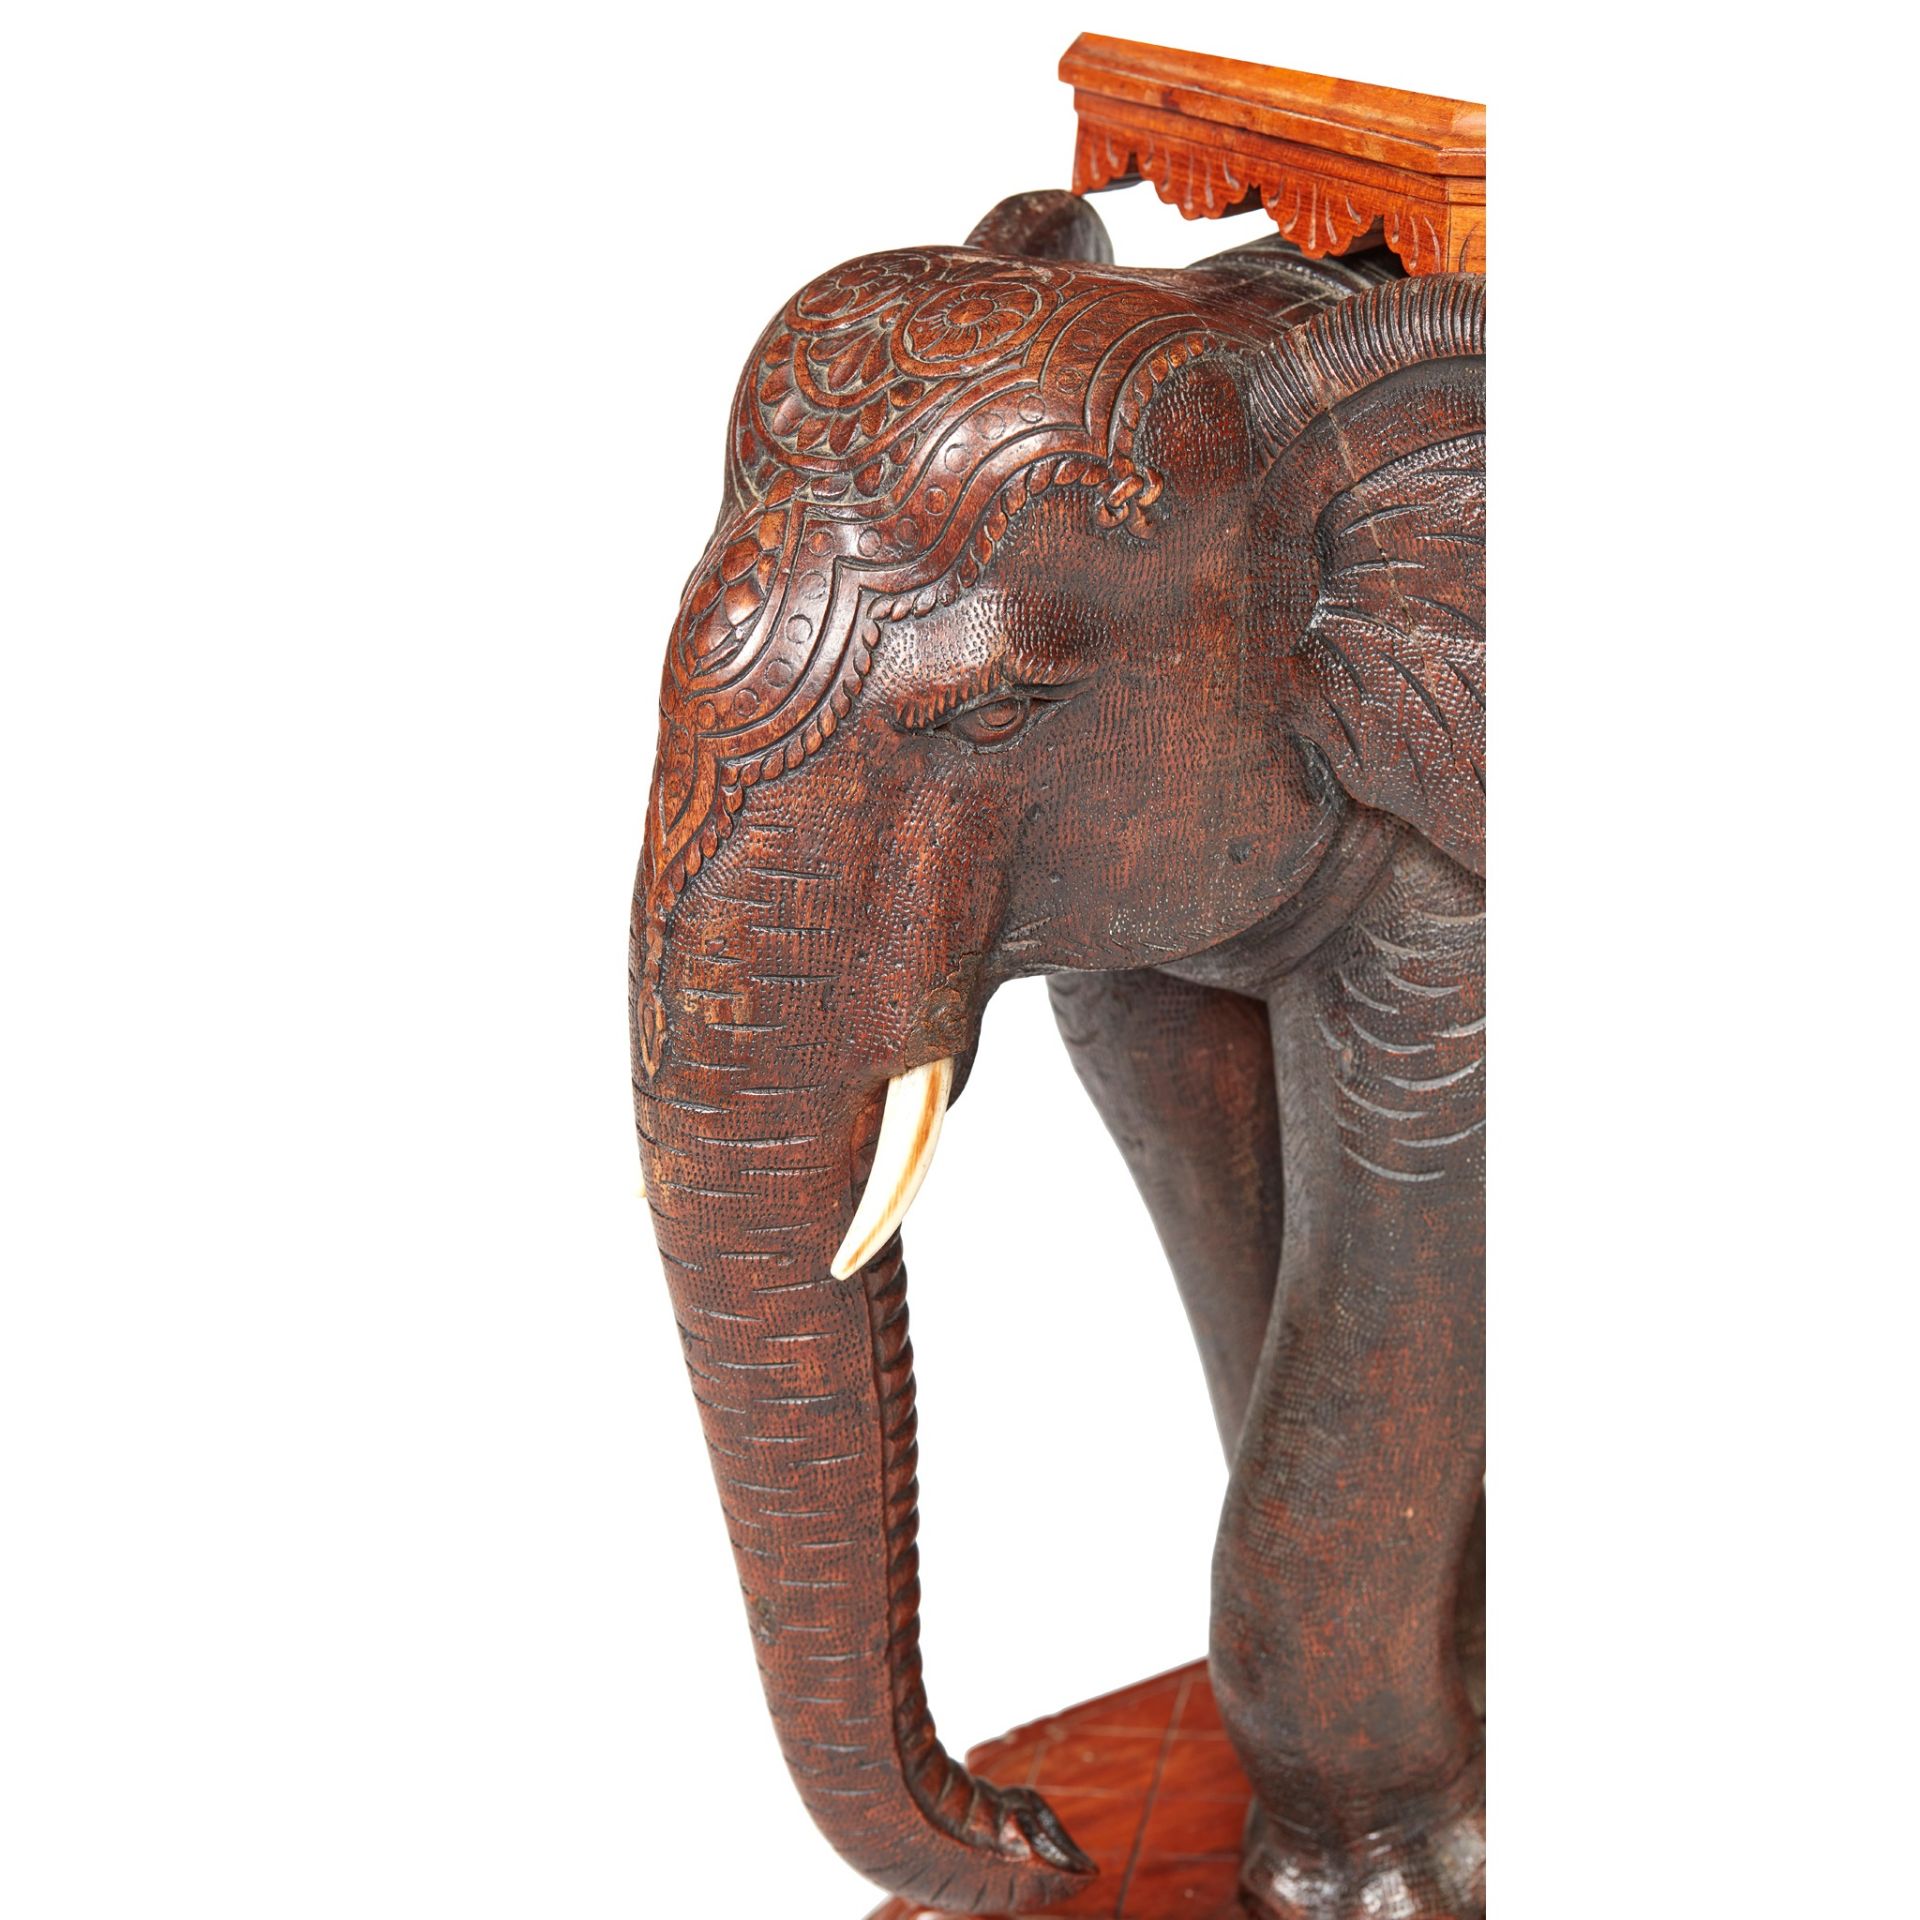 Y INDIAN CARVED HARDWOOD ELEPHANT STOOL 19TH CENTURY - Image 3 of 4